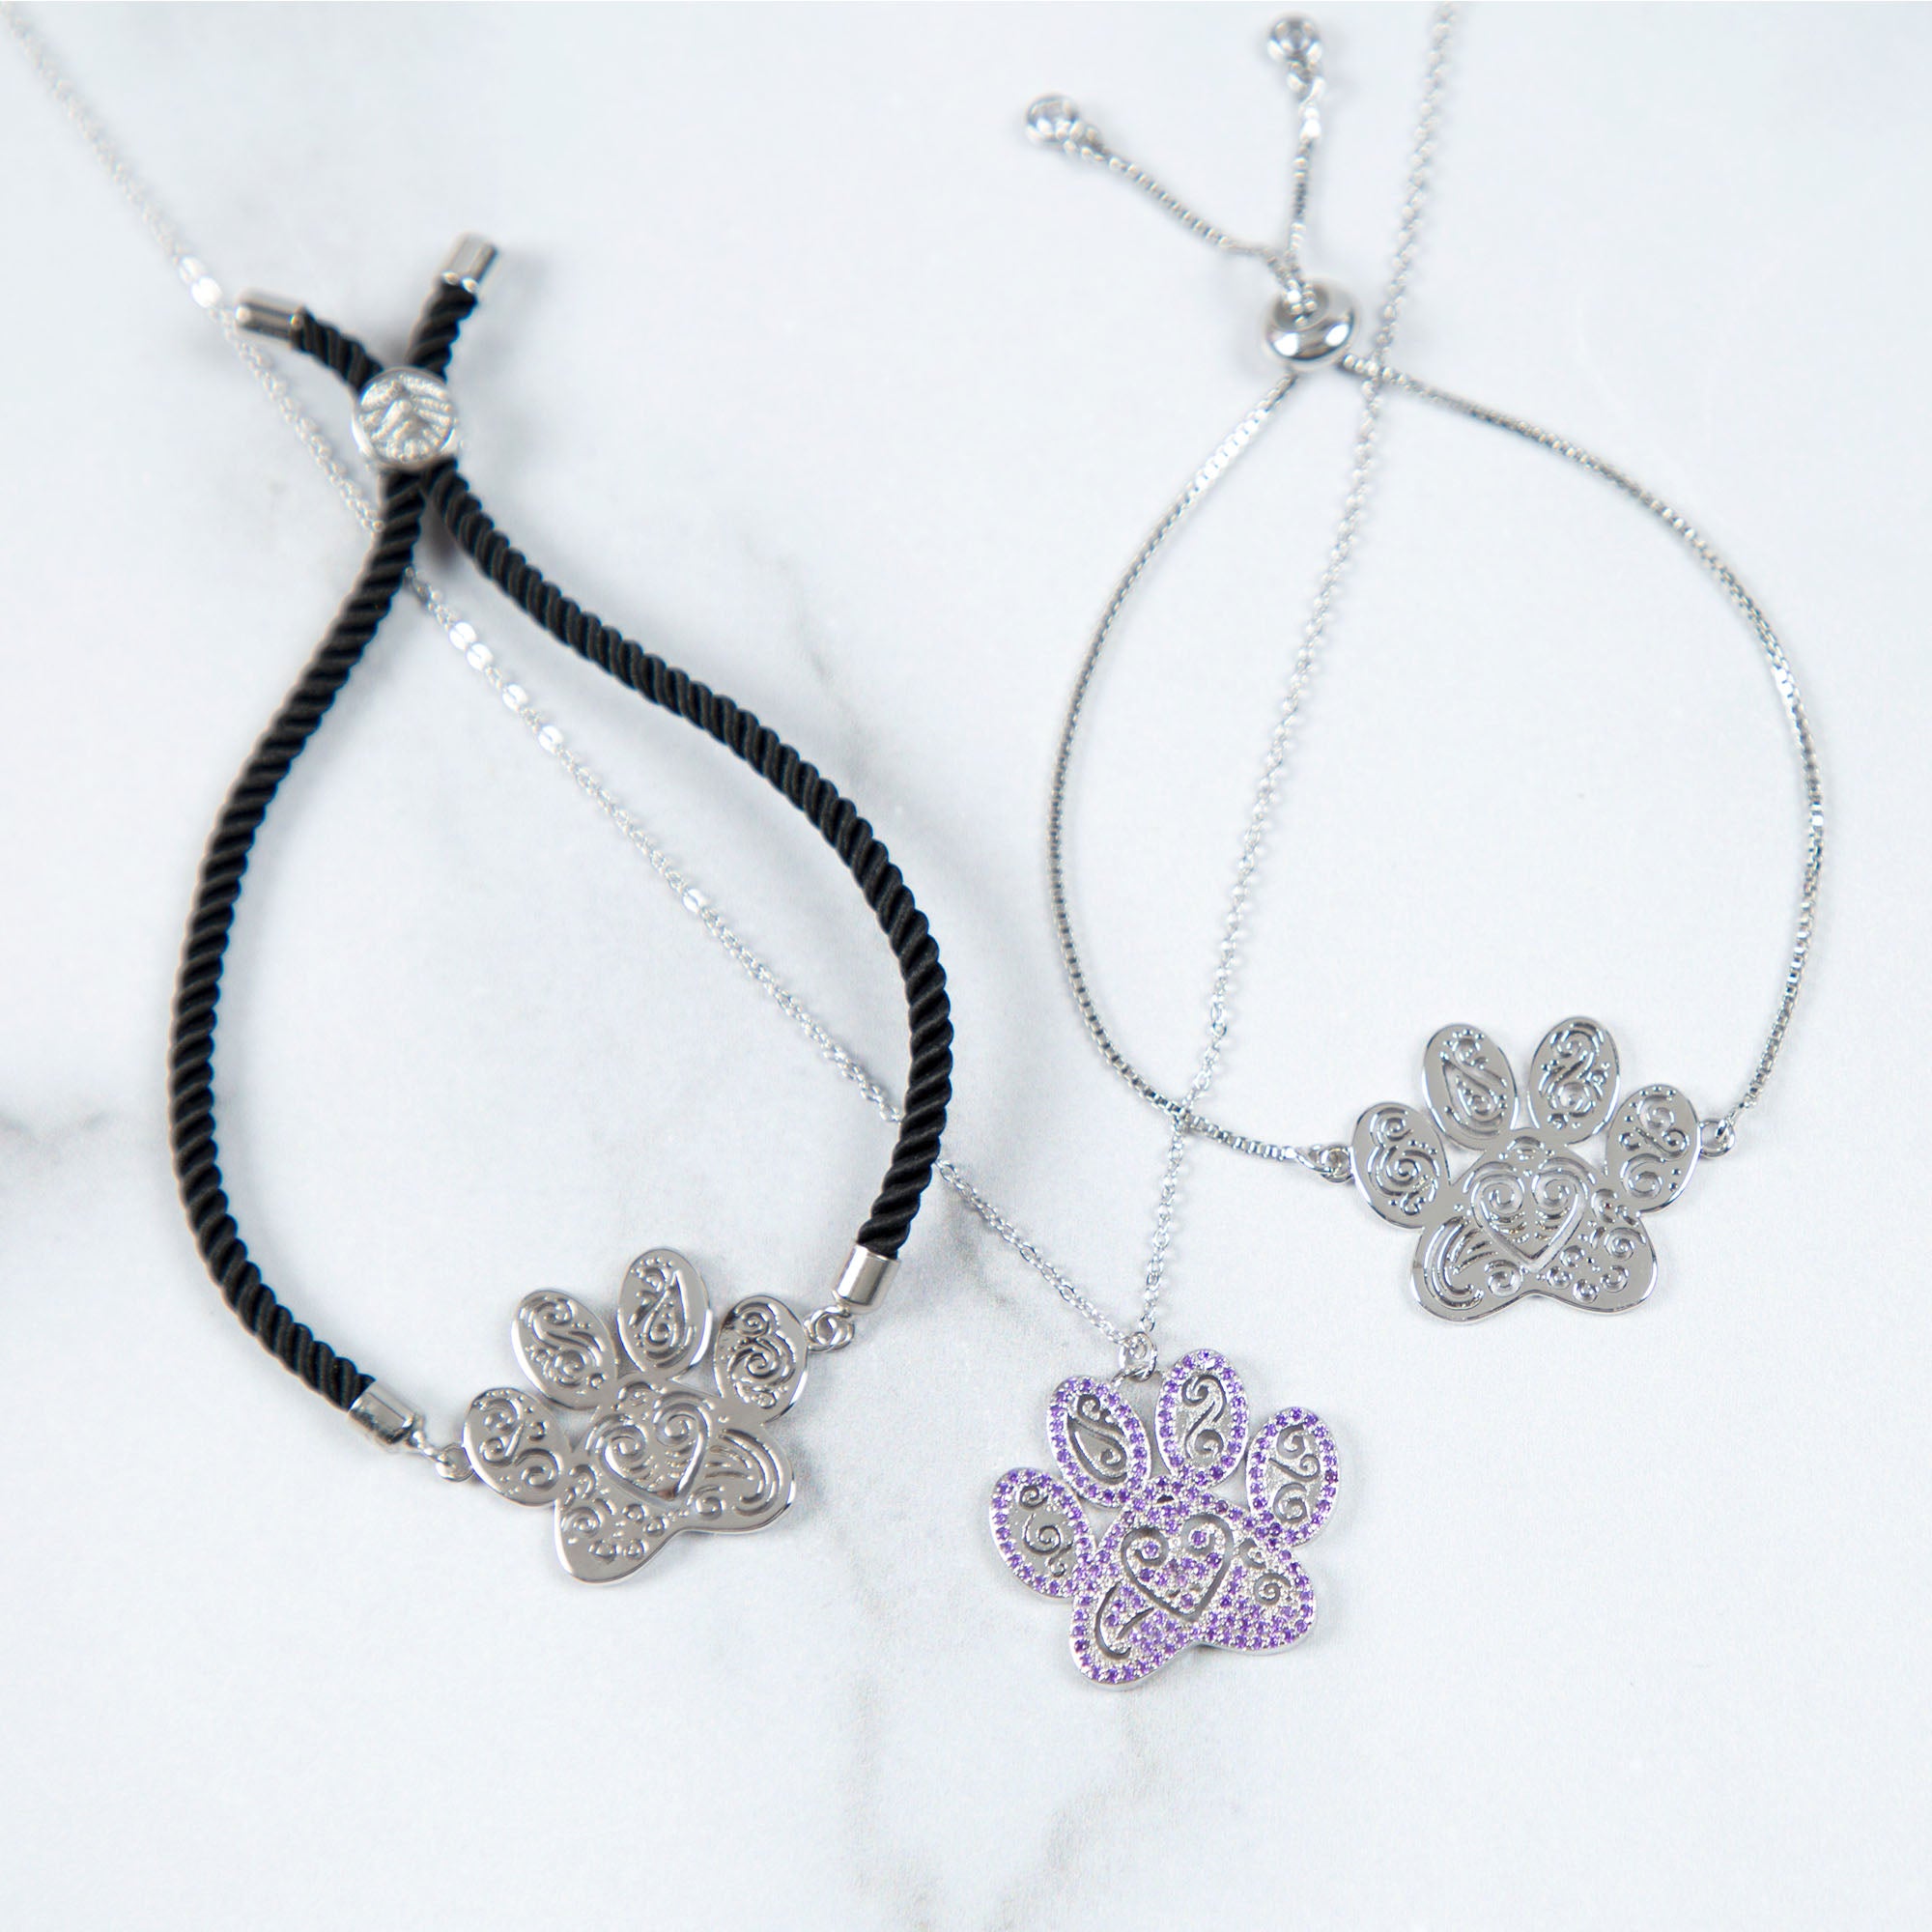 Ornate Crystal Paw Jewelry - Bracelet With Chain